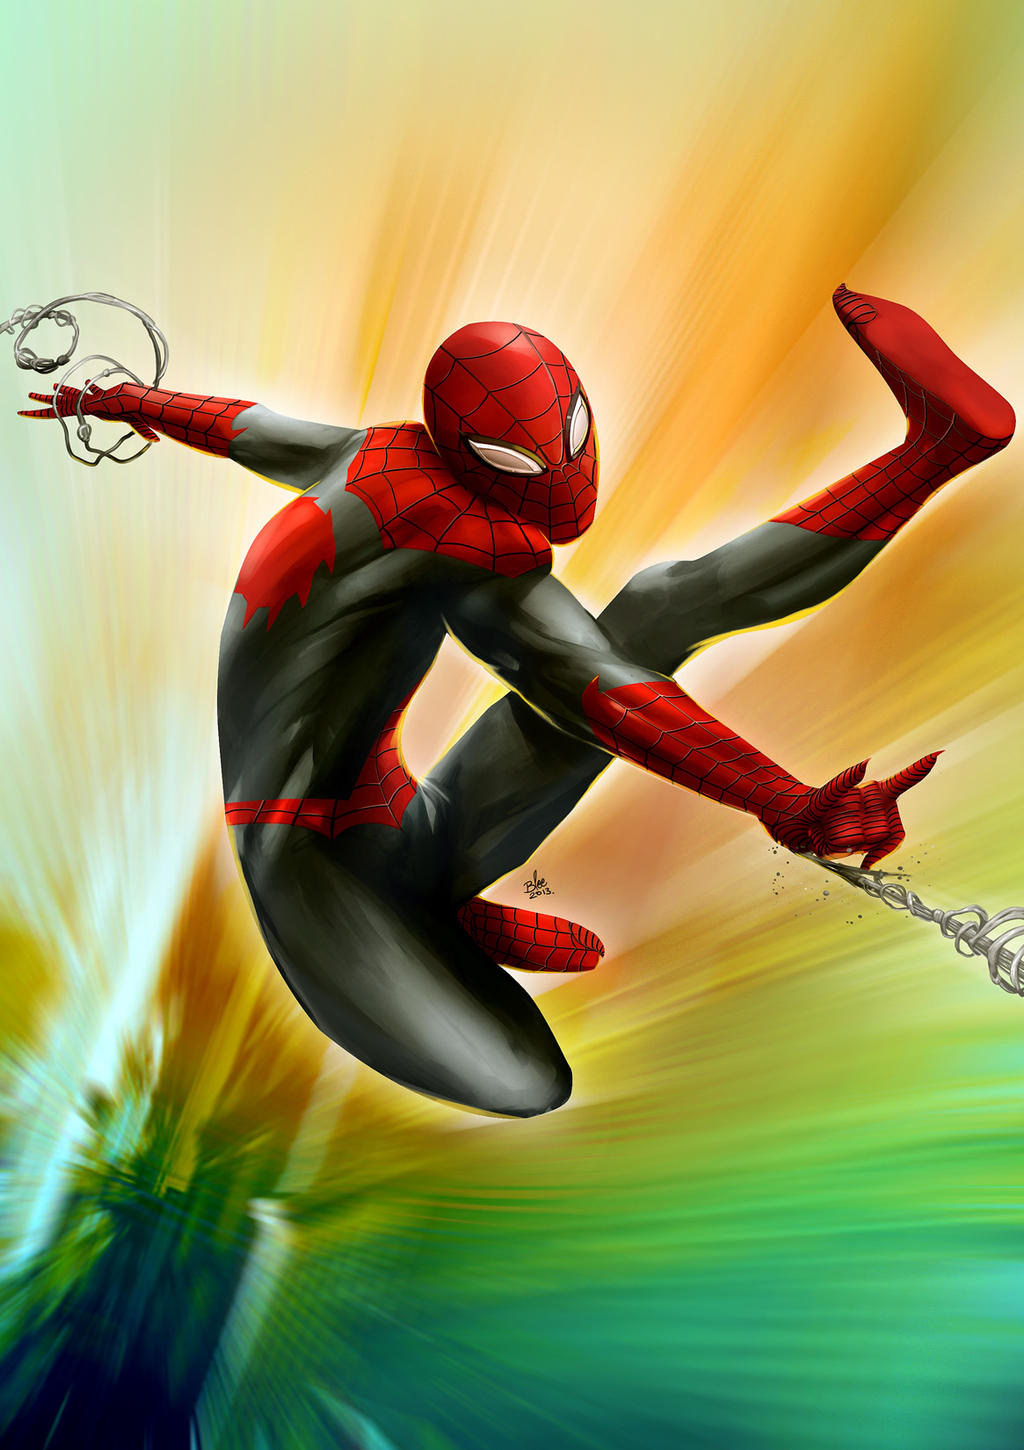 The superior spiderman